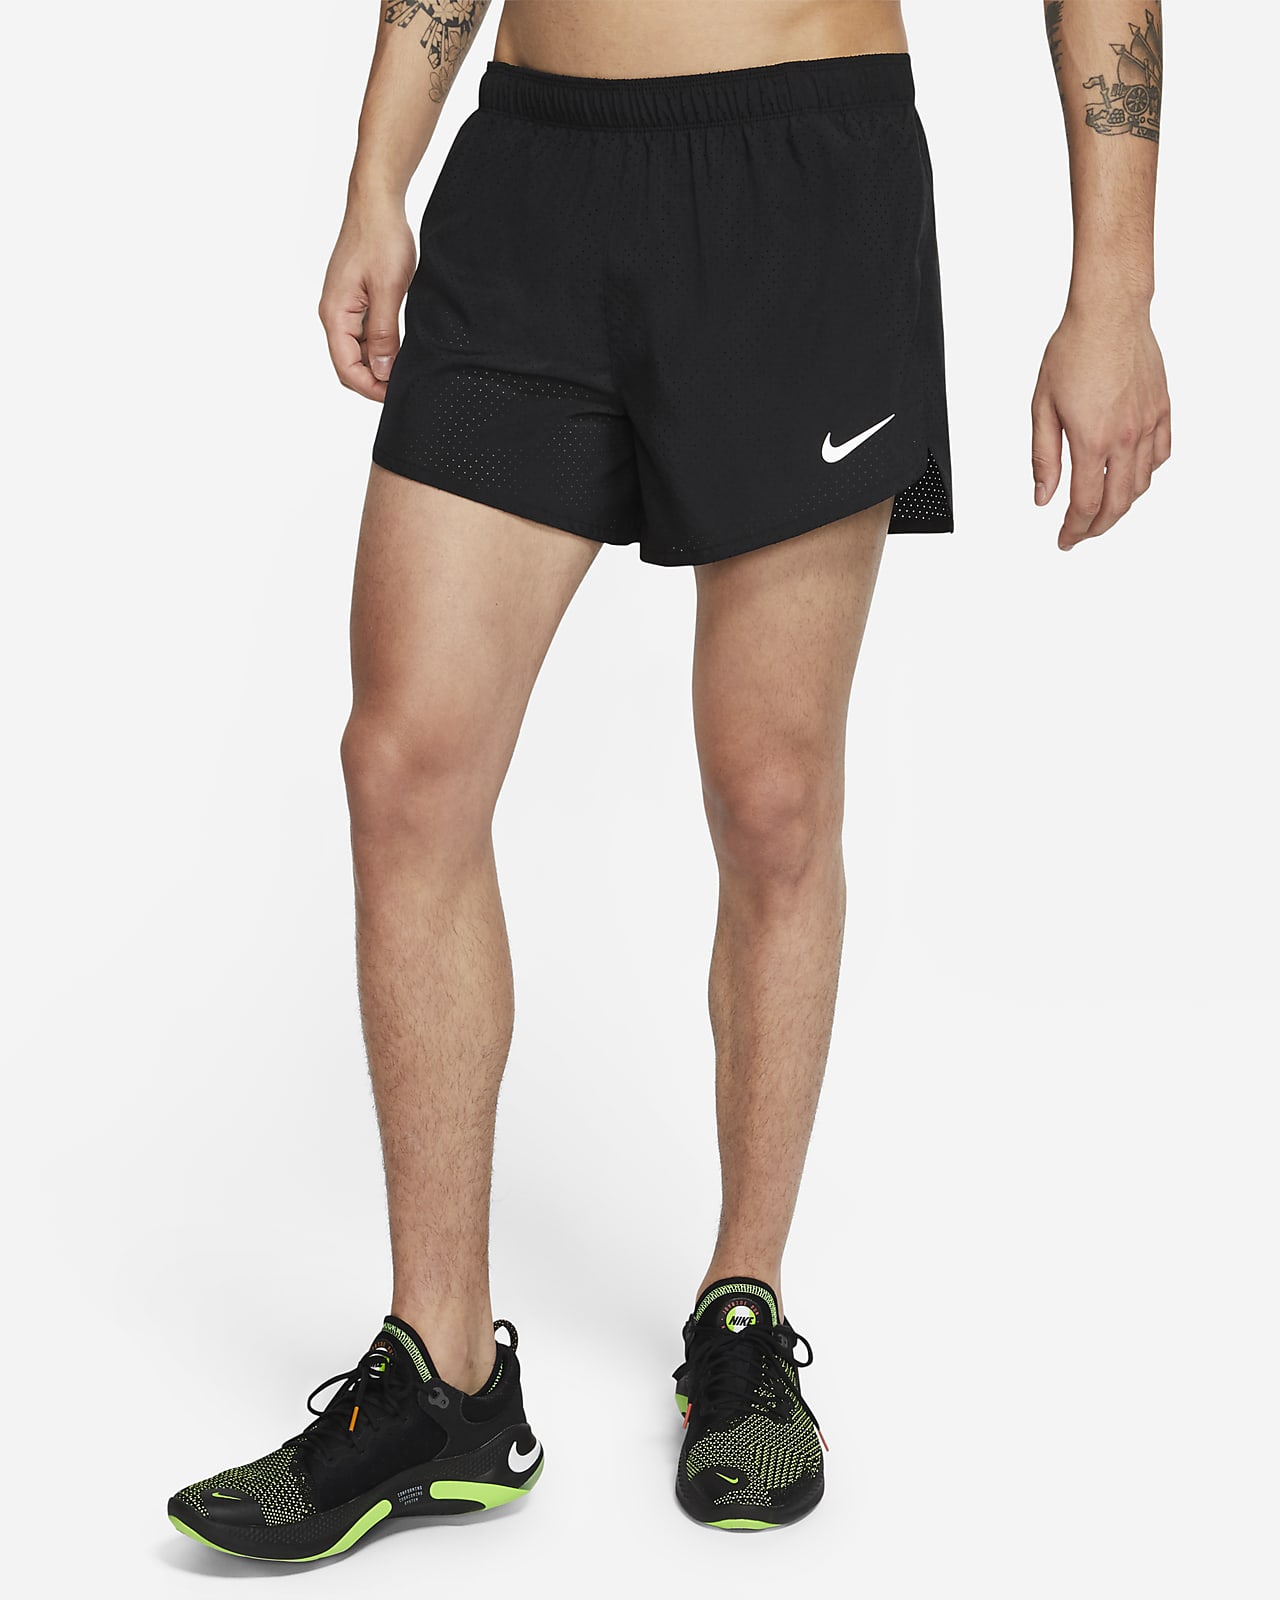 nike fast 4 inch running shorts